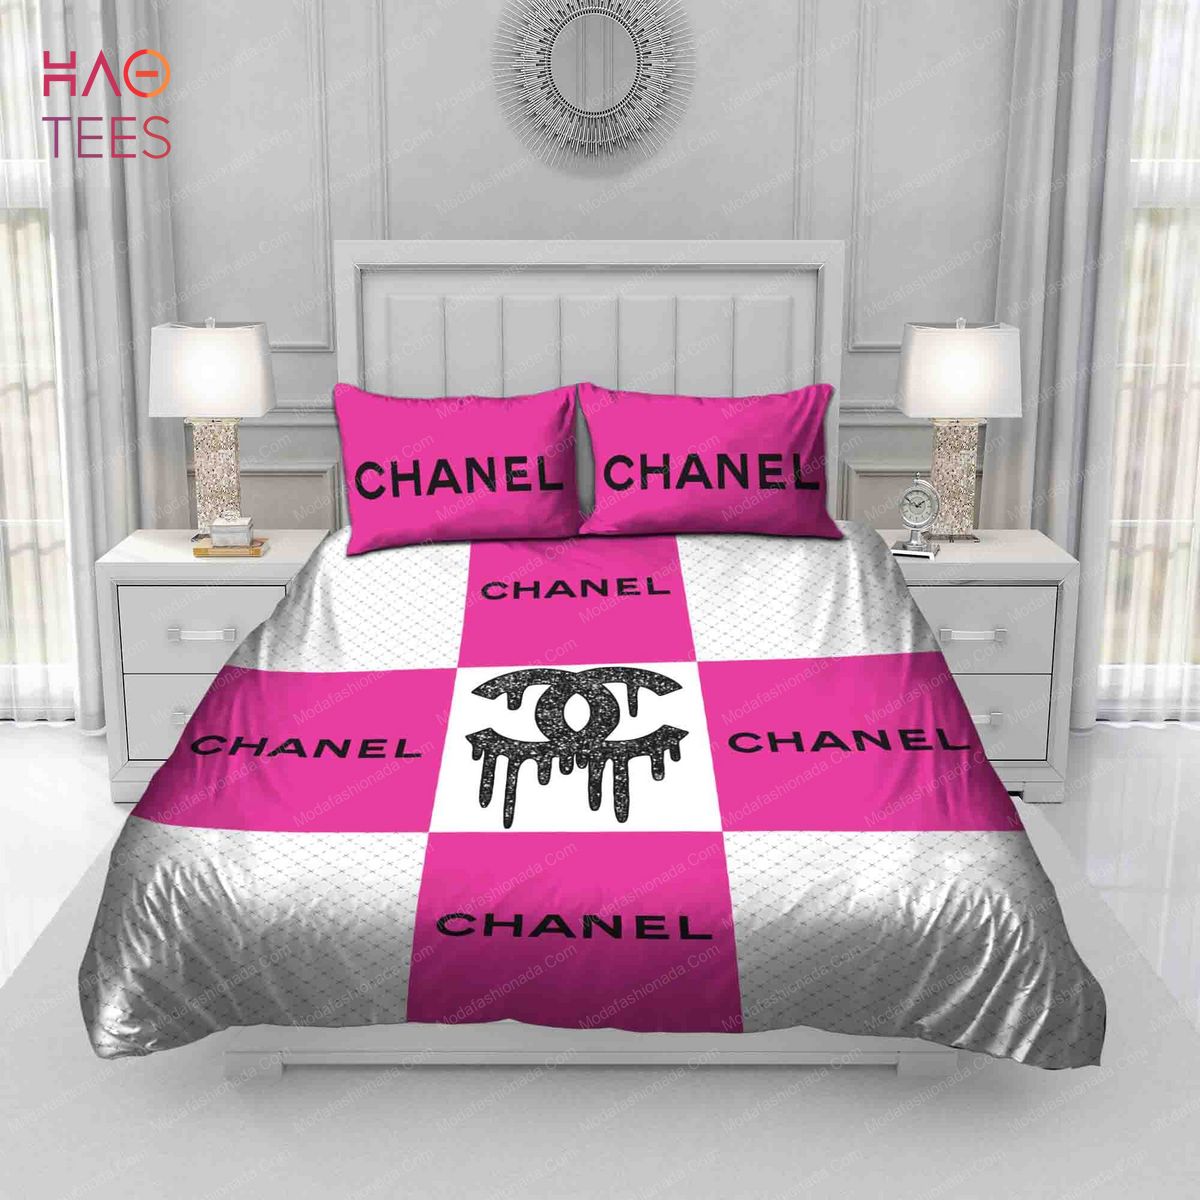 Chanel bedding set